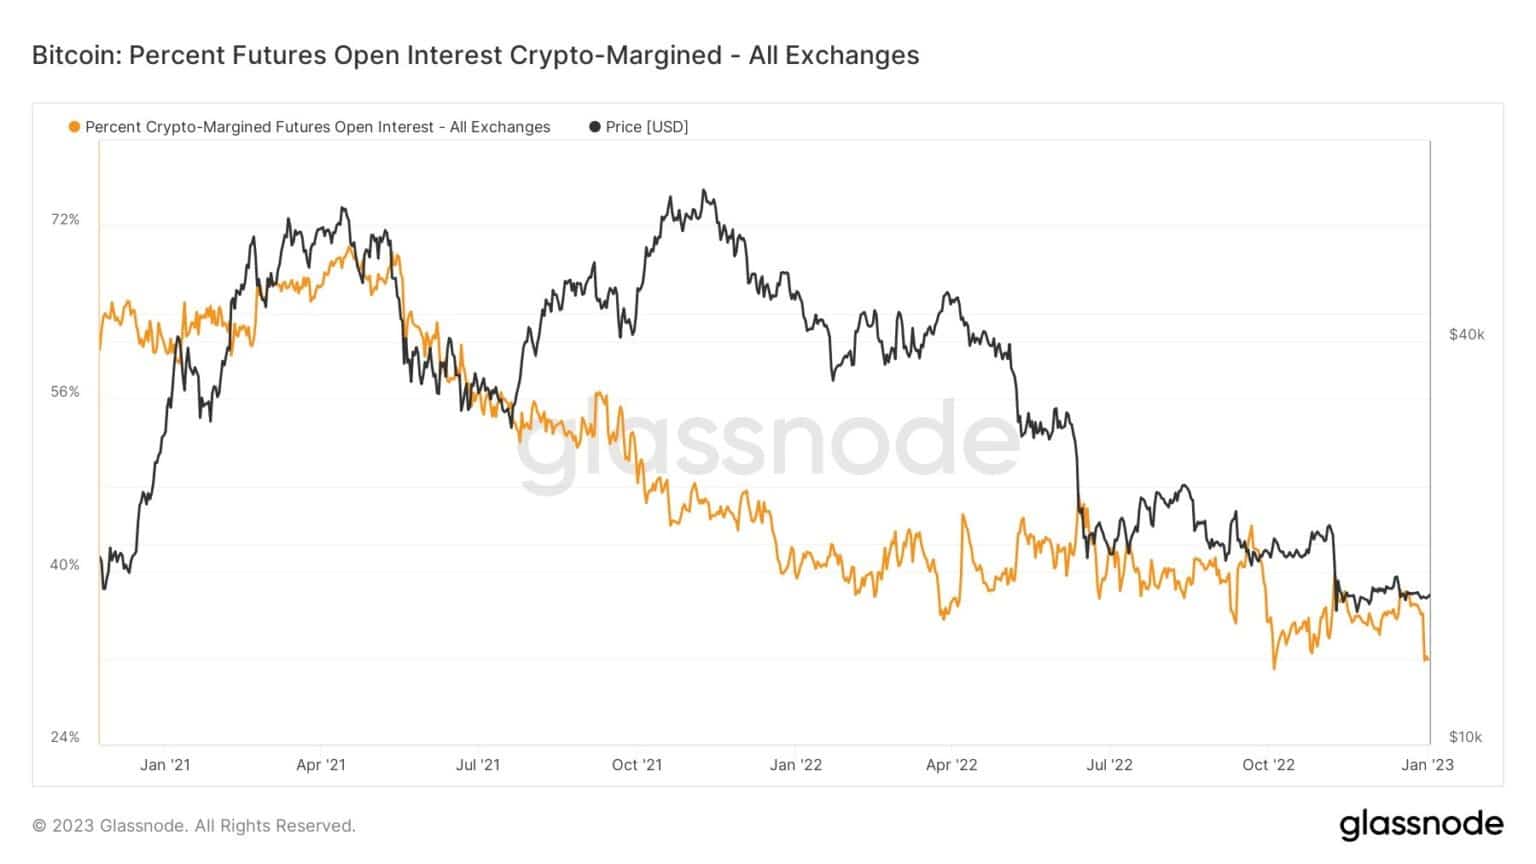 Bitcoin: Porcentaje de interés abierto en futuros con margen criptográfico - Fuente: Glassnode.com